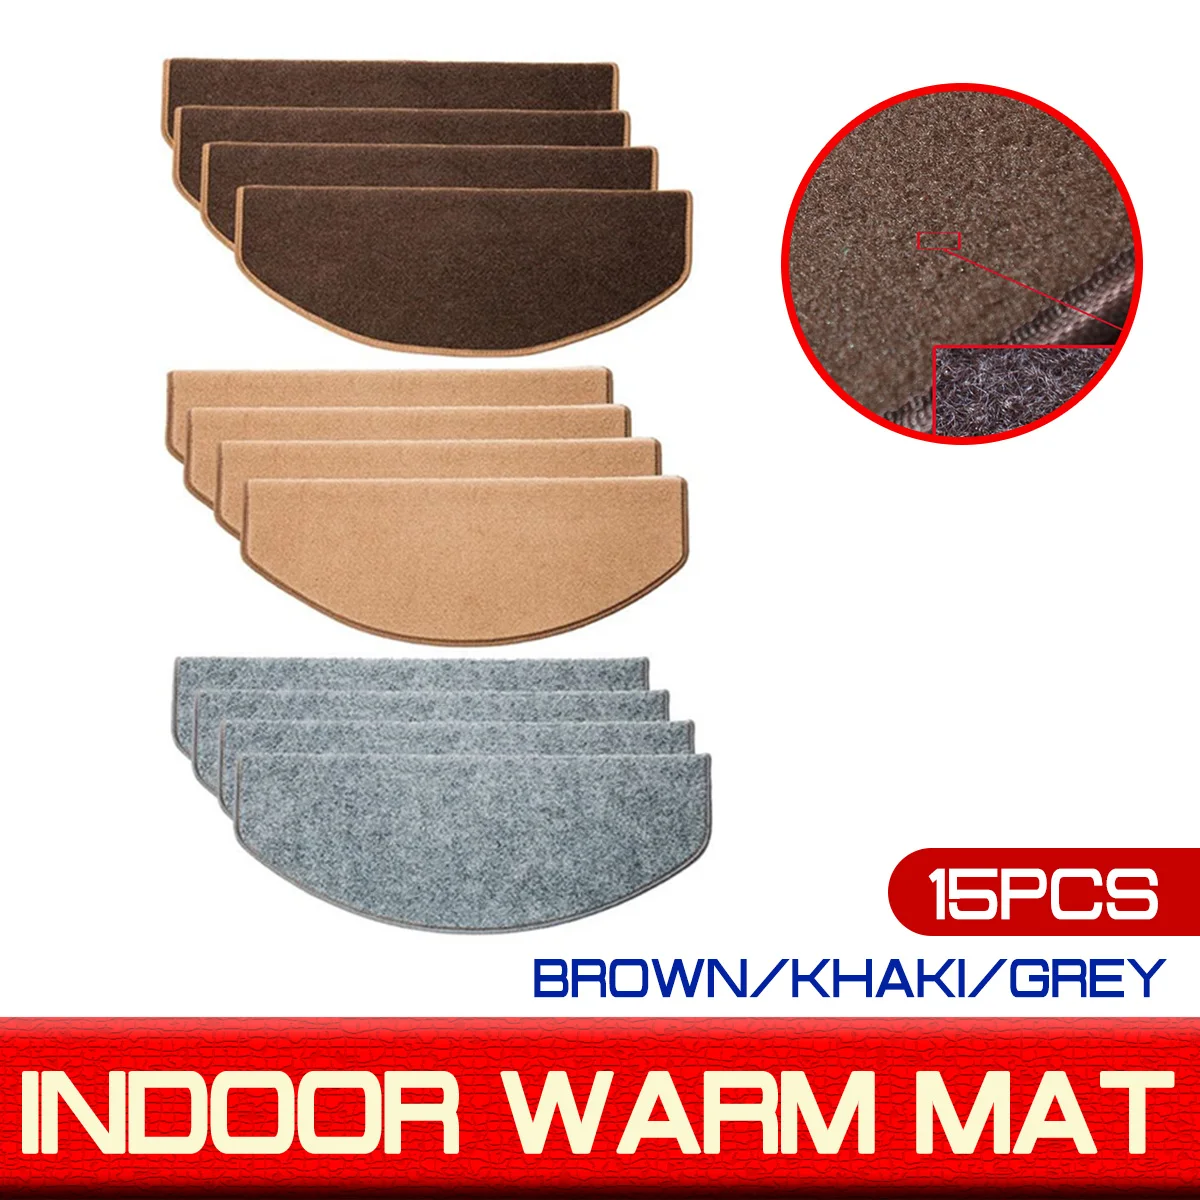 

15PCS Floor Mats 55x21 Stair Tread Carpet Mats Self Adhesive Stair Mat Stair Mat Anti-Skid Step Rugs Safety Mute Indoor Warm Pad